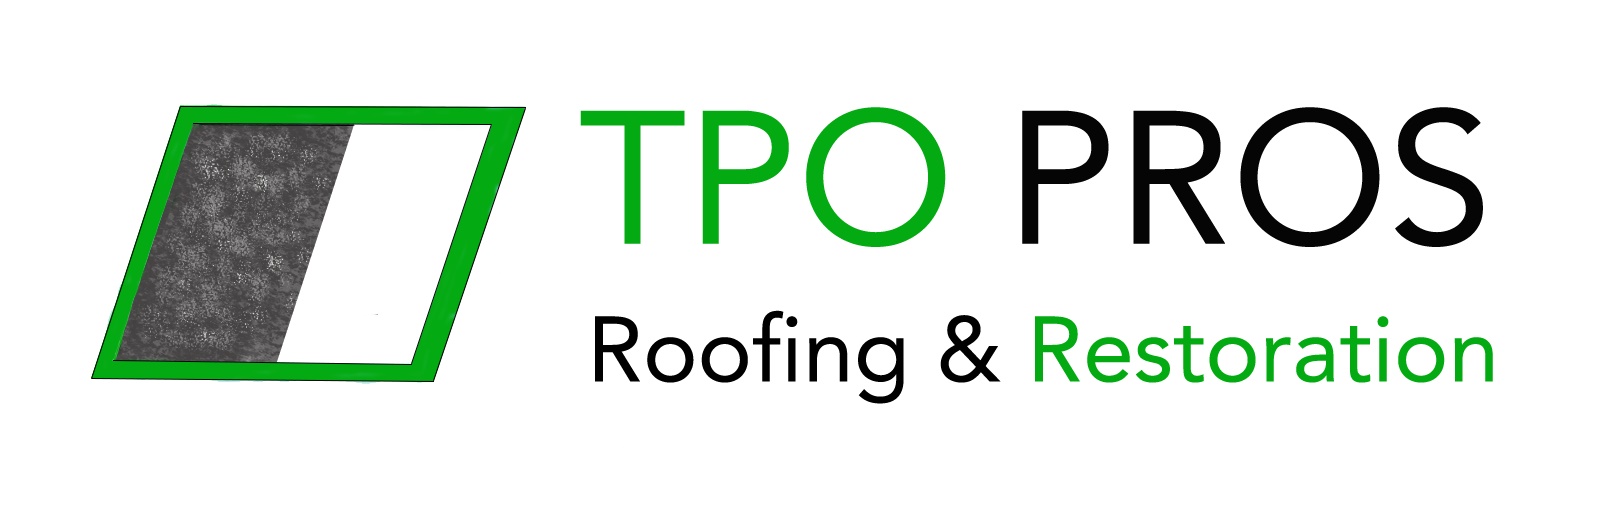 Tpo Pros Roofing & Restoration